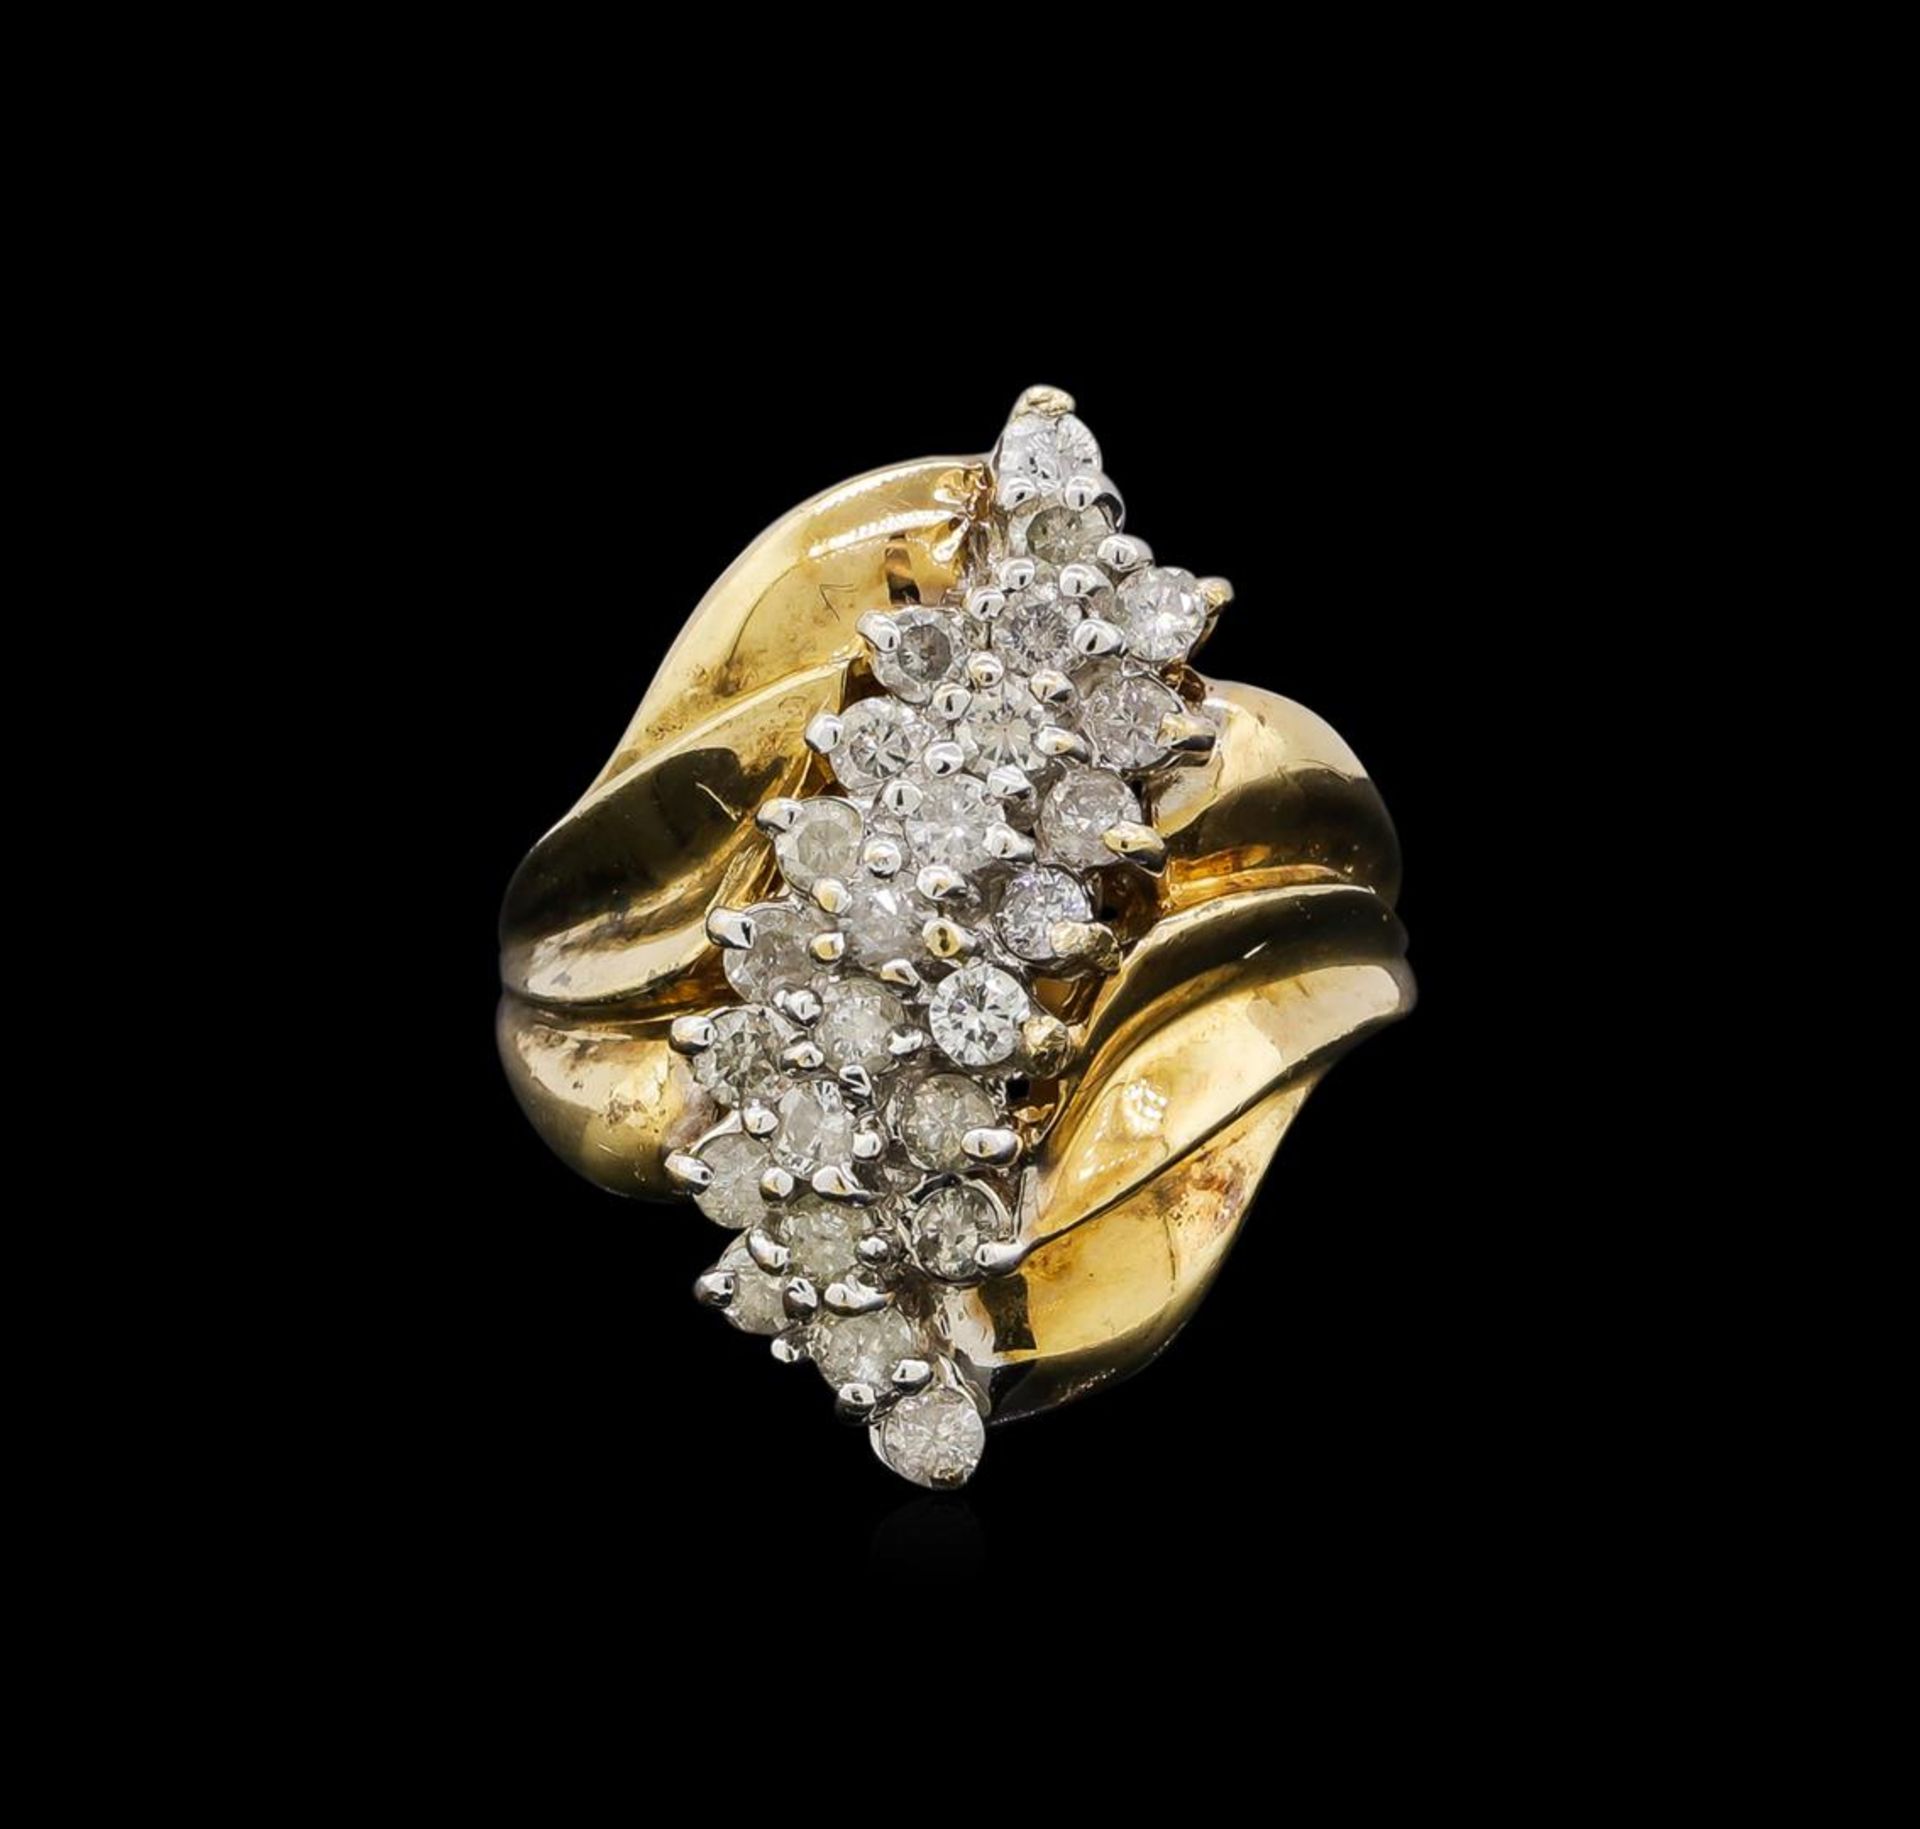 0.95 ctw Diamond Ring - 10KT Yellow Gold - Image 2 of 5